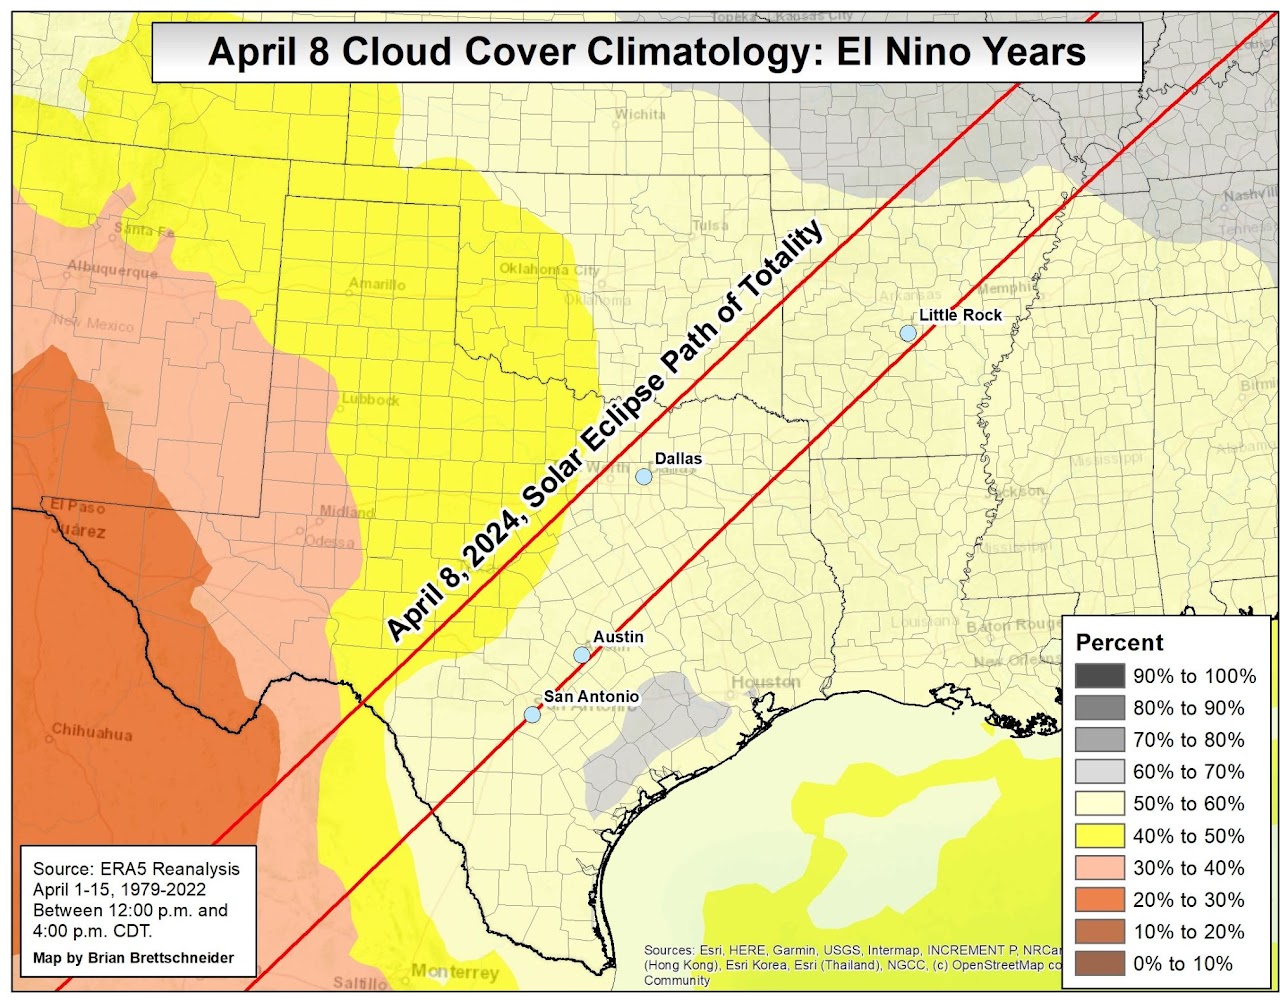 April 8 Cloud Cover Climatology - El Nino Years